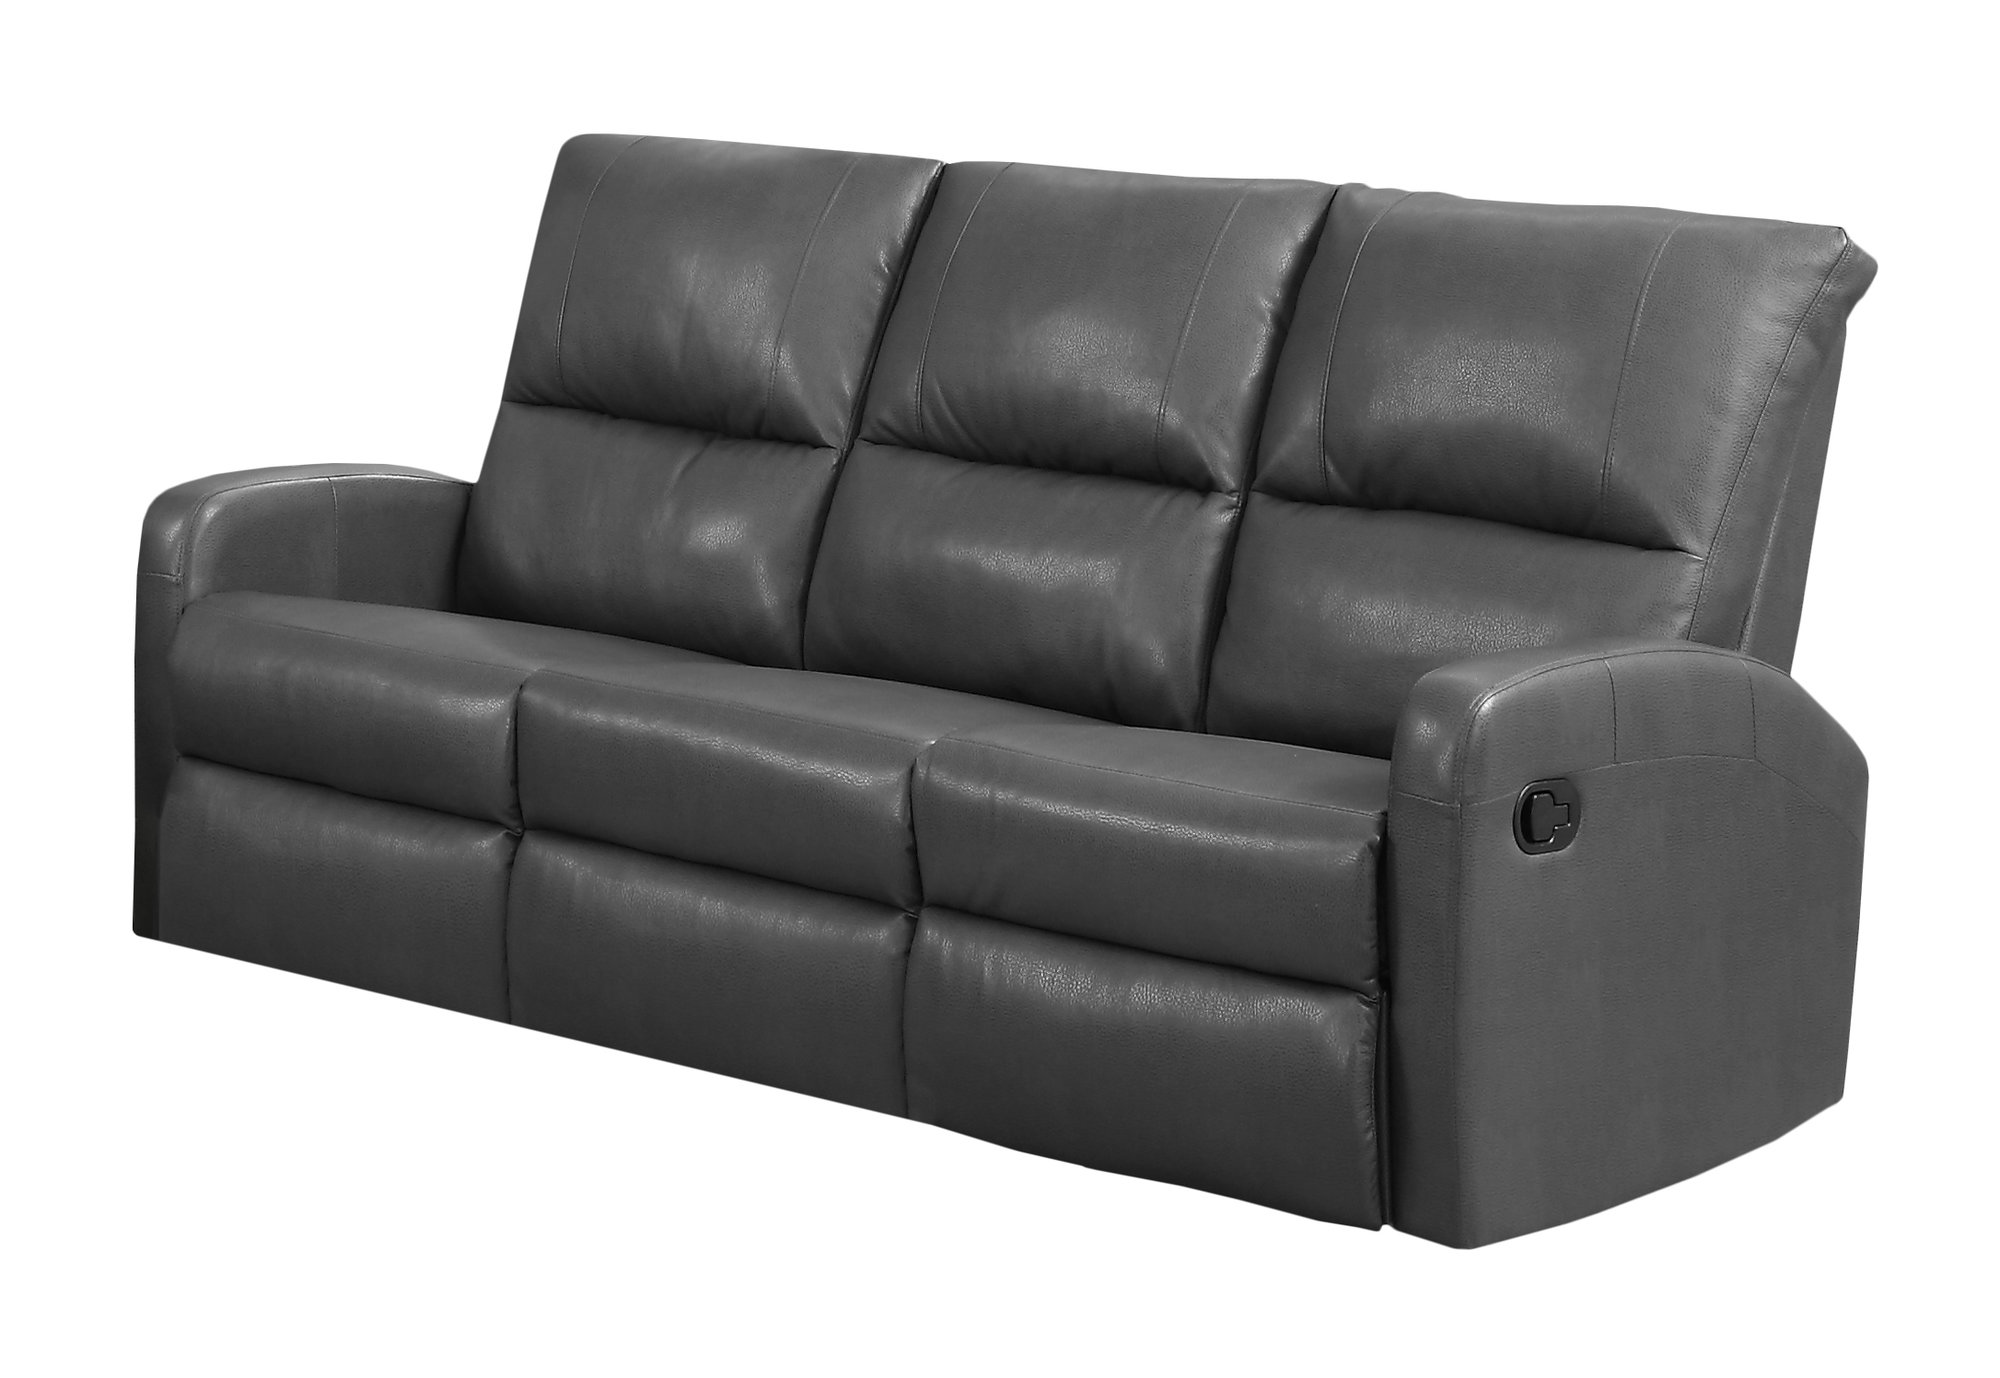 delancey leather reclining sofa